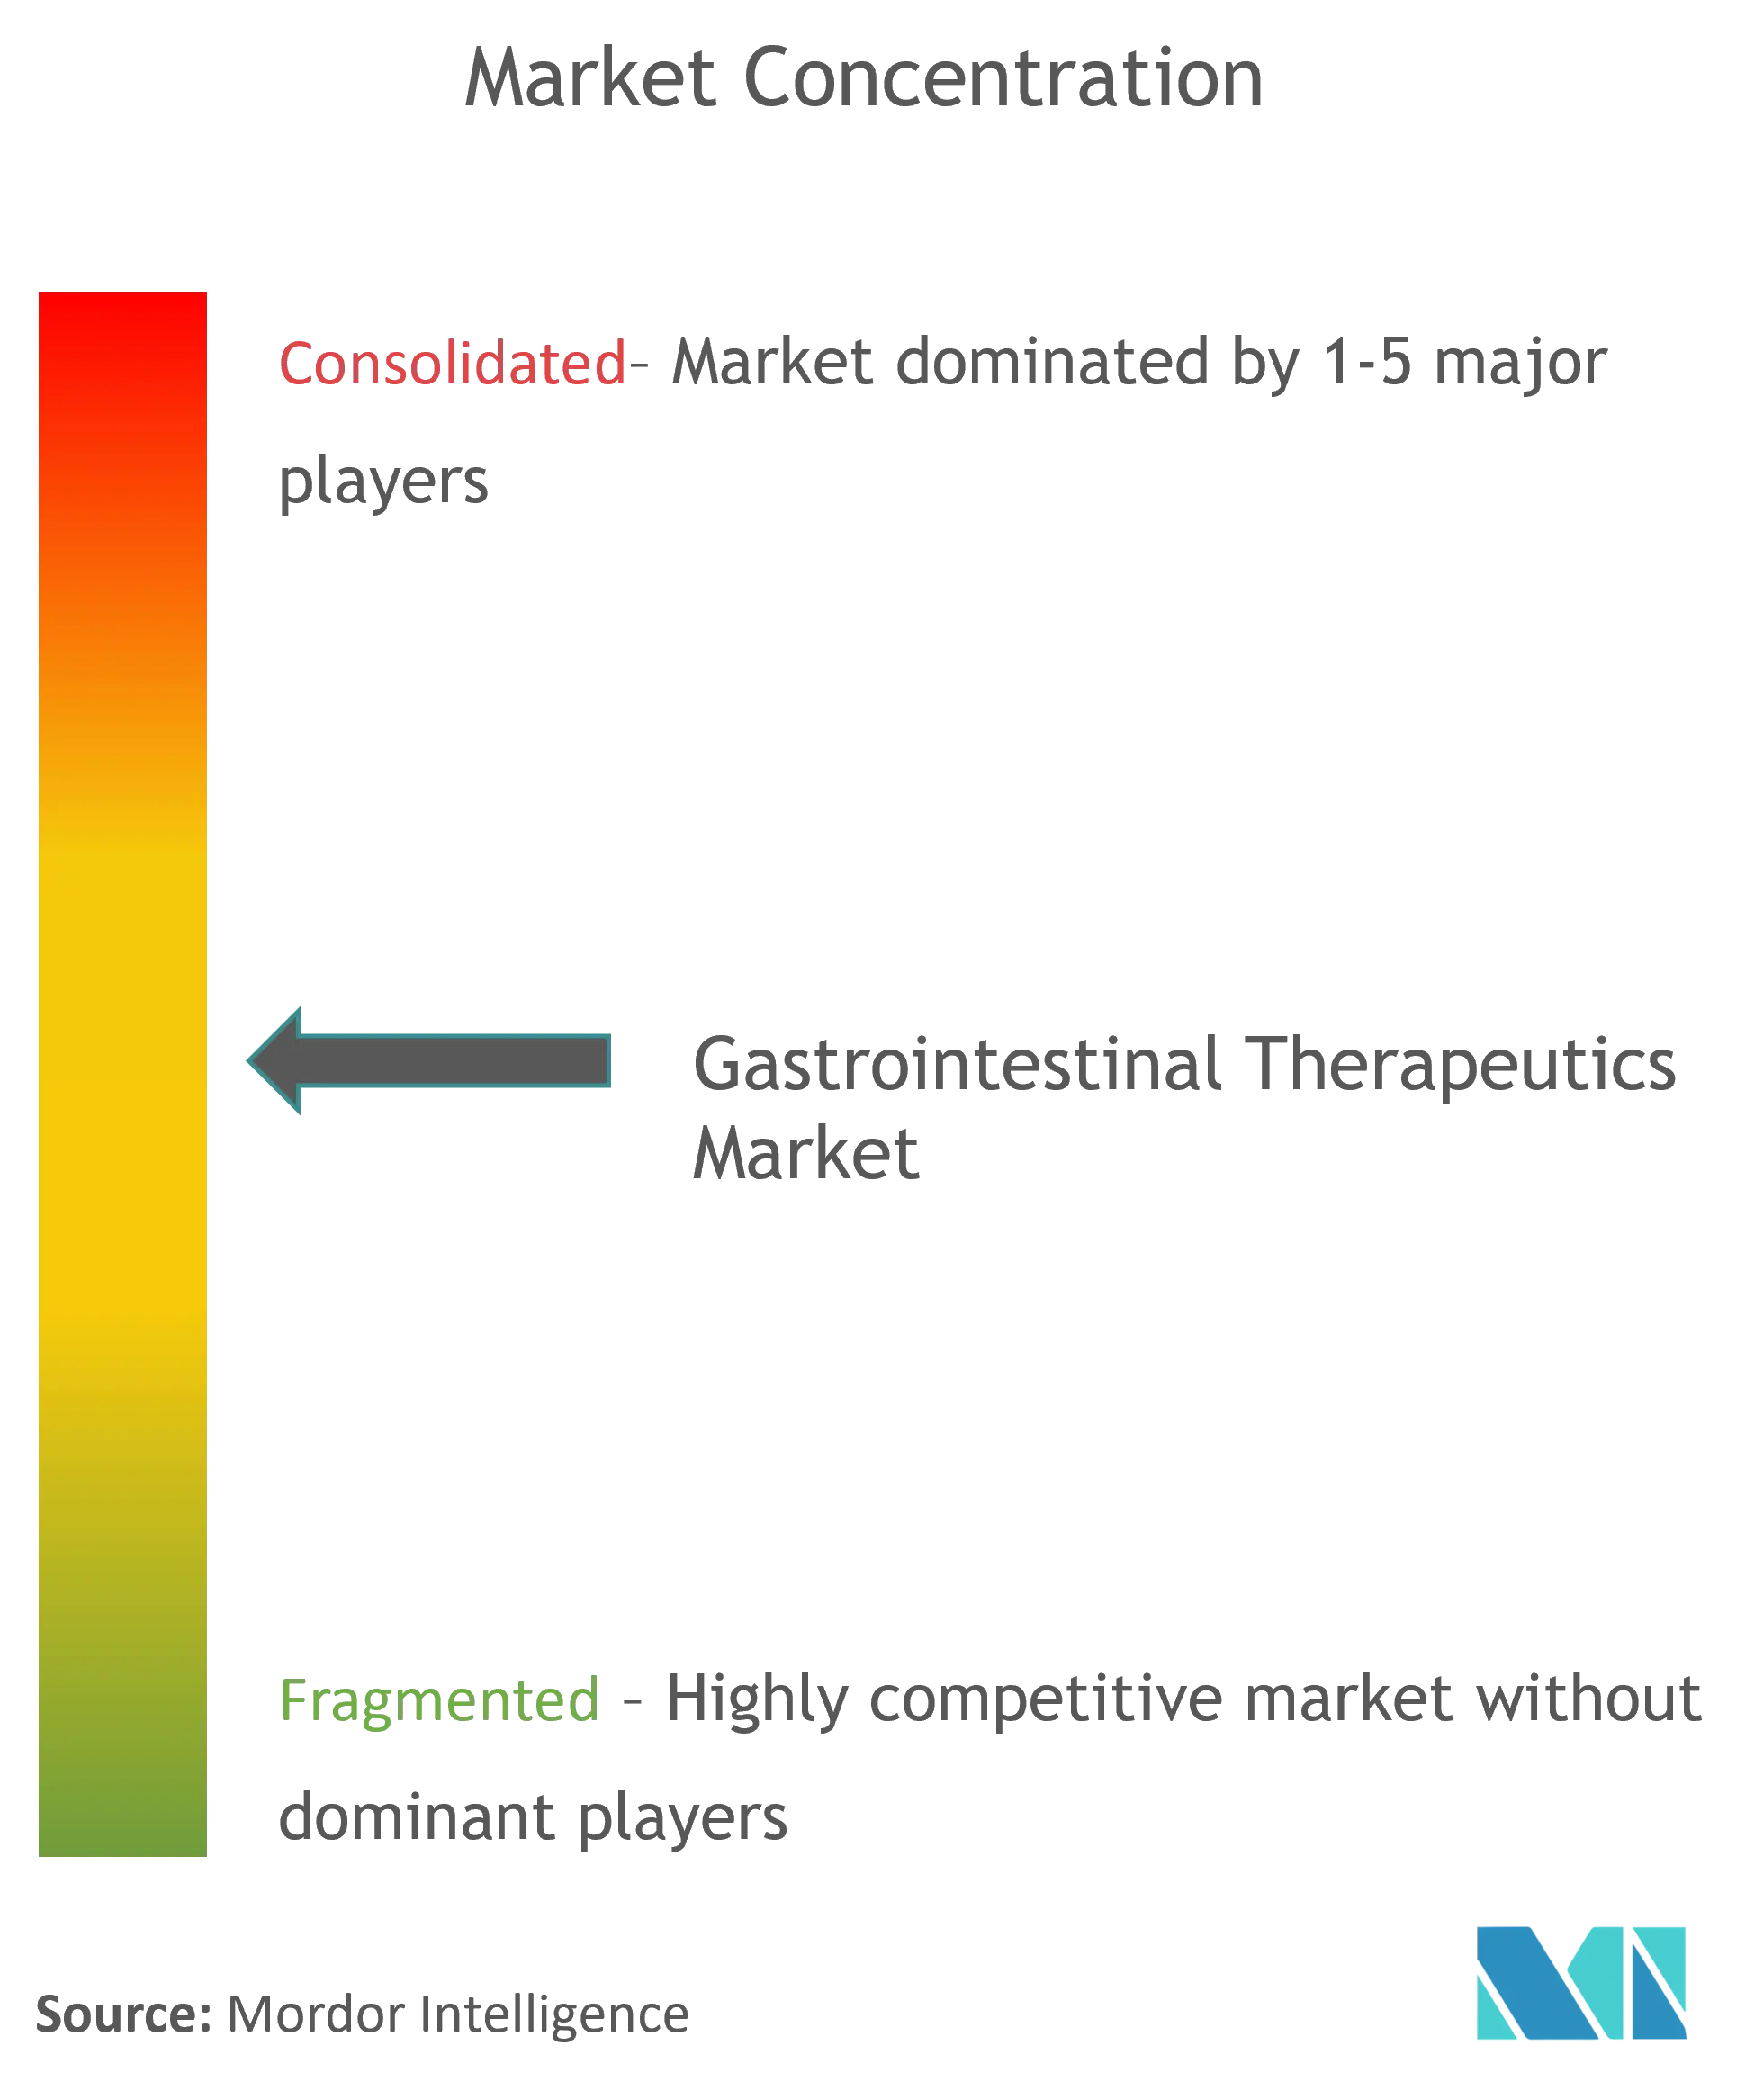 Gastrointestinal Therapeutics Market Concentration